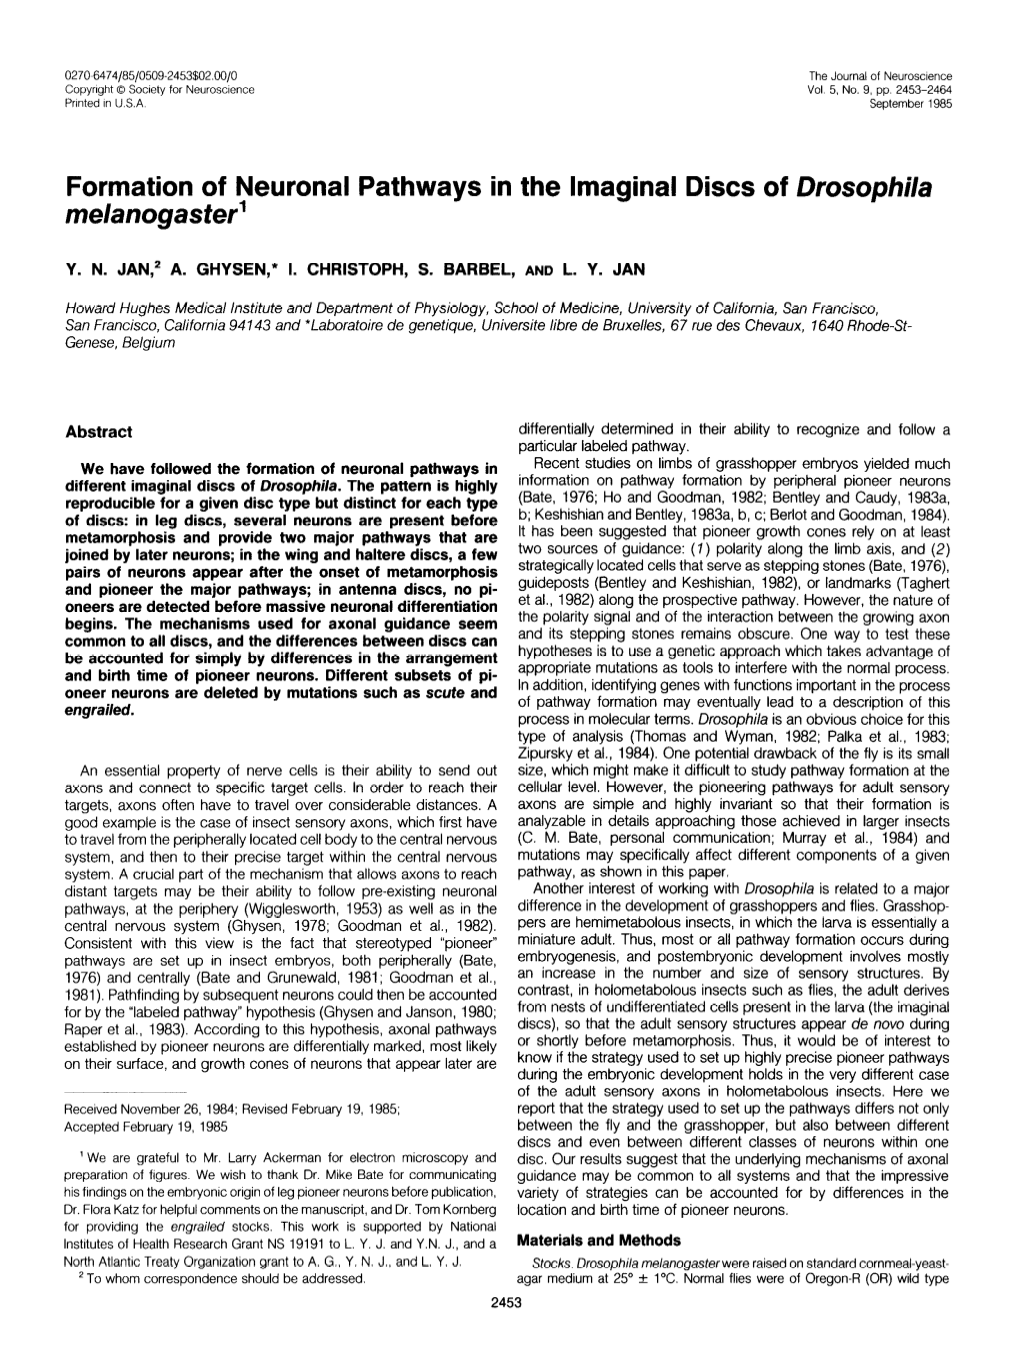 Formation of Neuronal Pathways in the Lmaginal Discs of Drosophila Melanogaster’